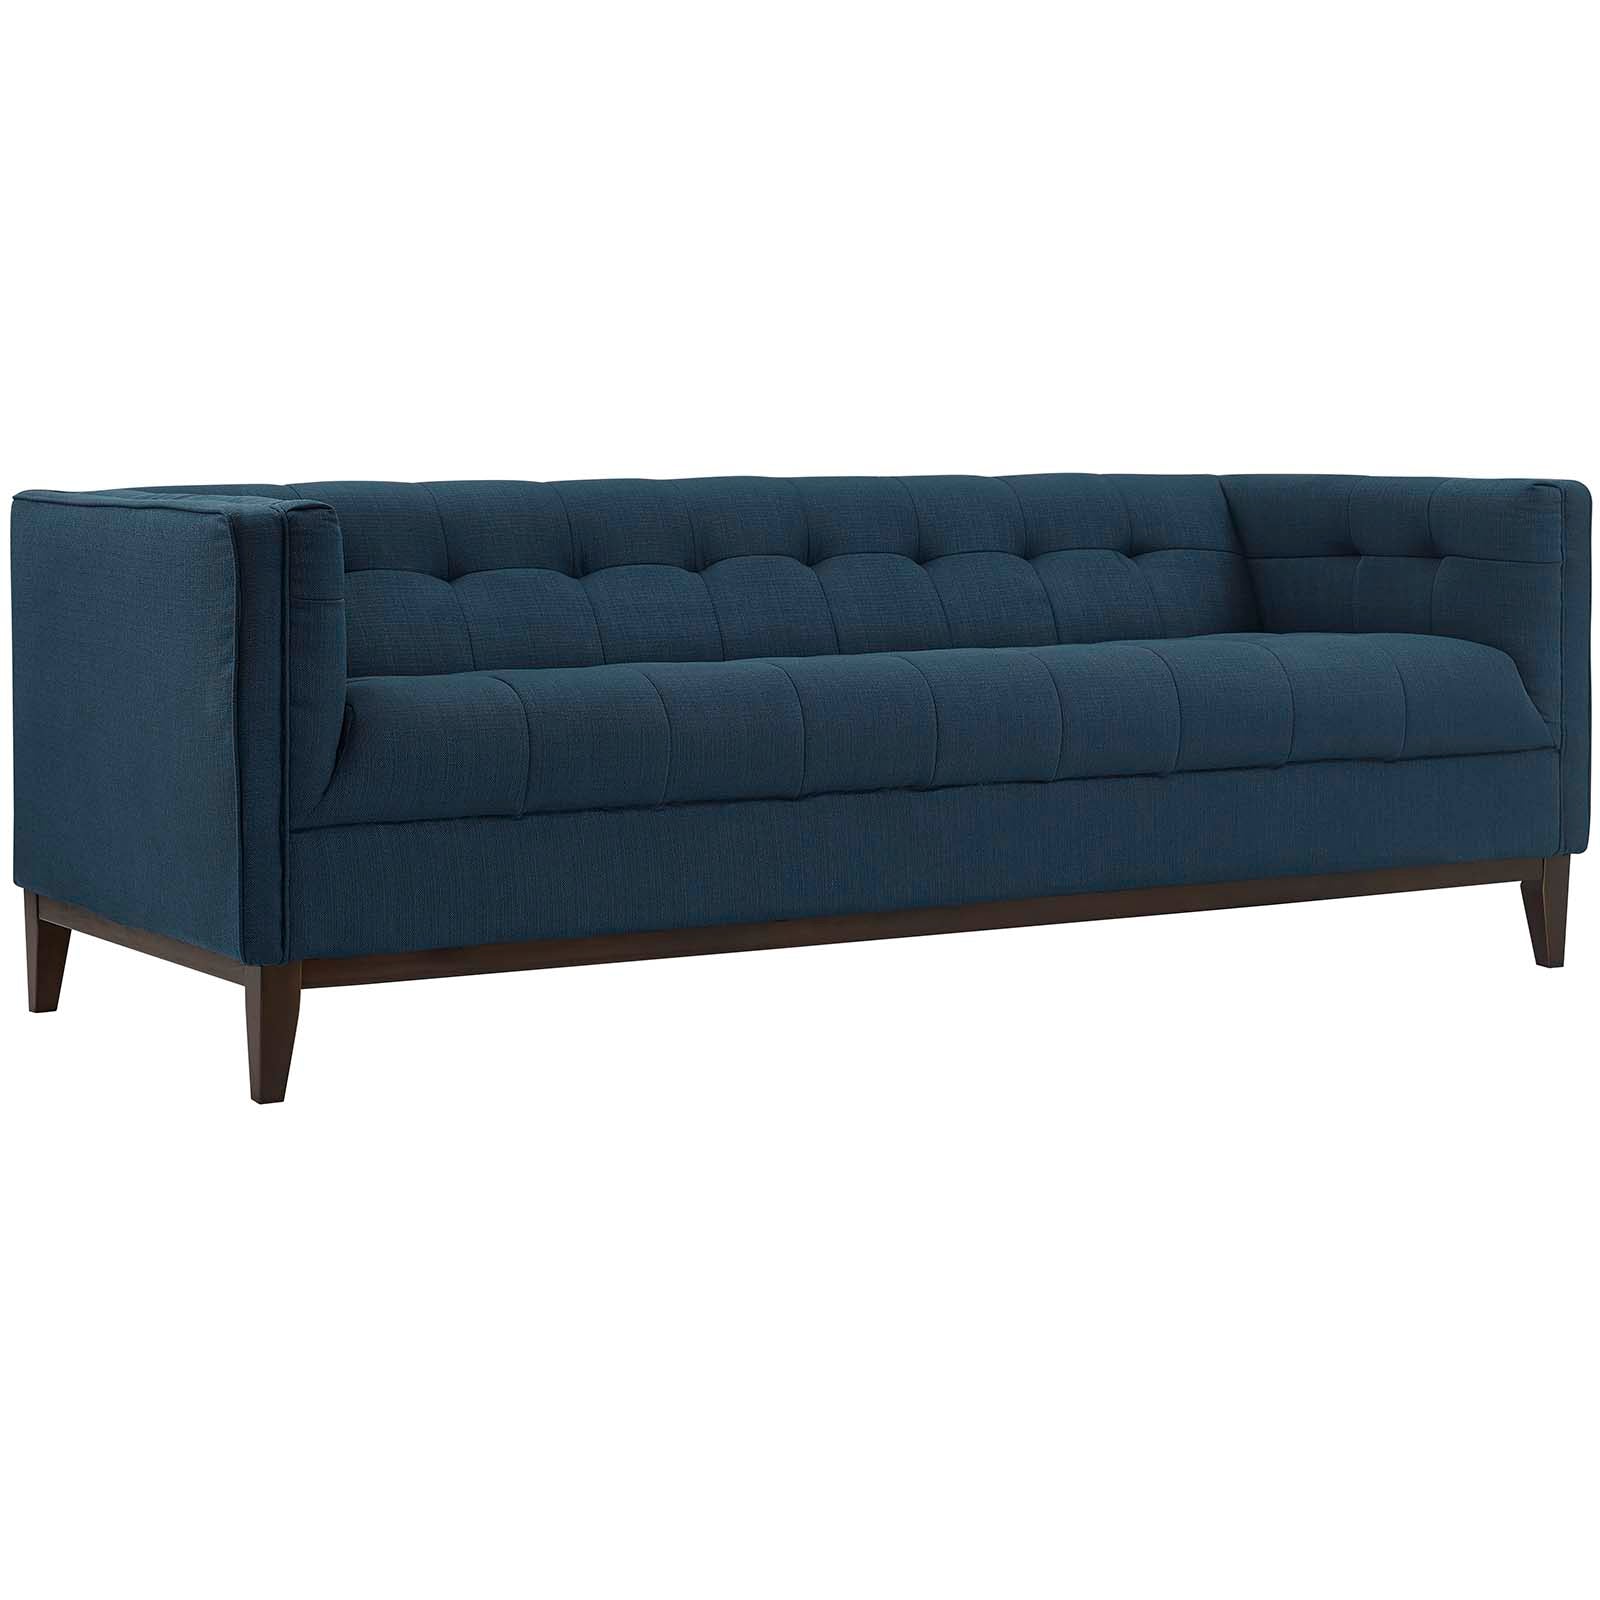 Serve Upholstered Fabric Sofa - East Shore Modern Home Furnishings